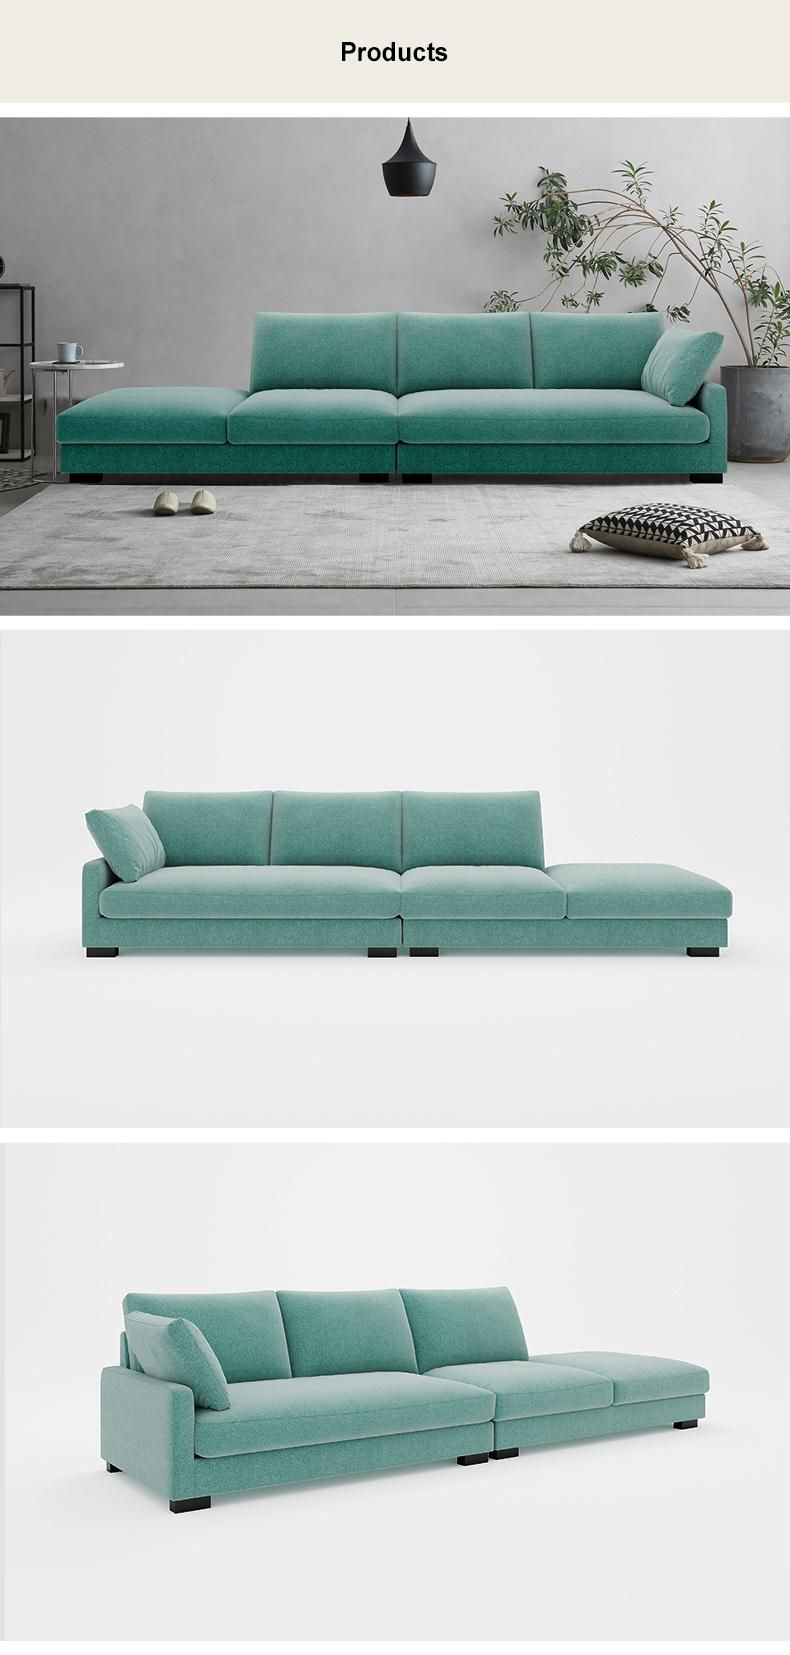 High Back Fabric Modular Sectional Setings Modern Furniture Recliner Sofa